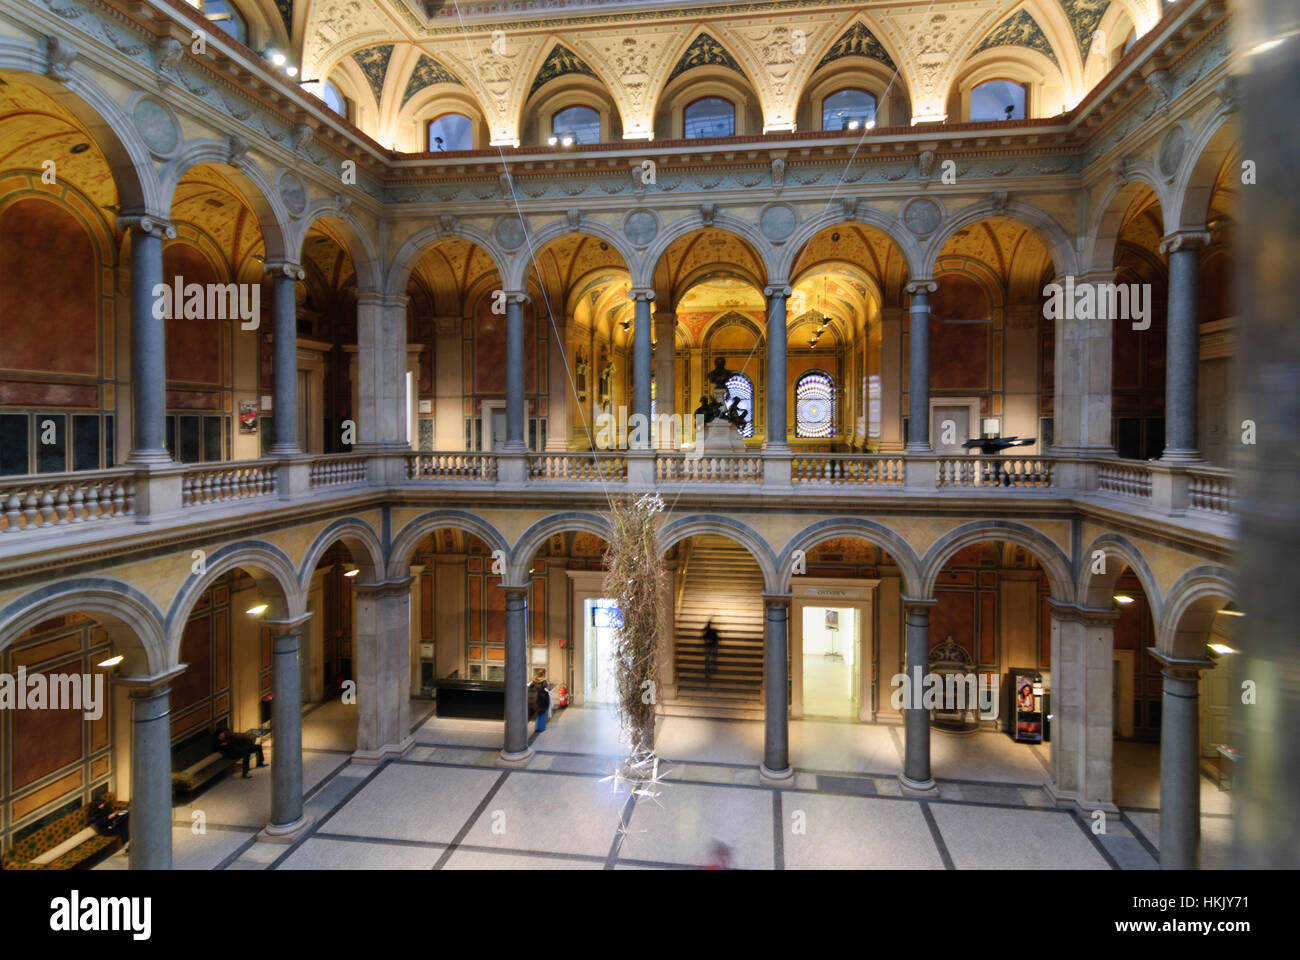 Mak Museum Vienna Immagini e Fotos Stock - Alamy